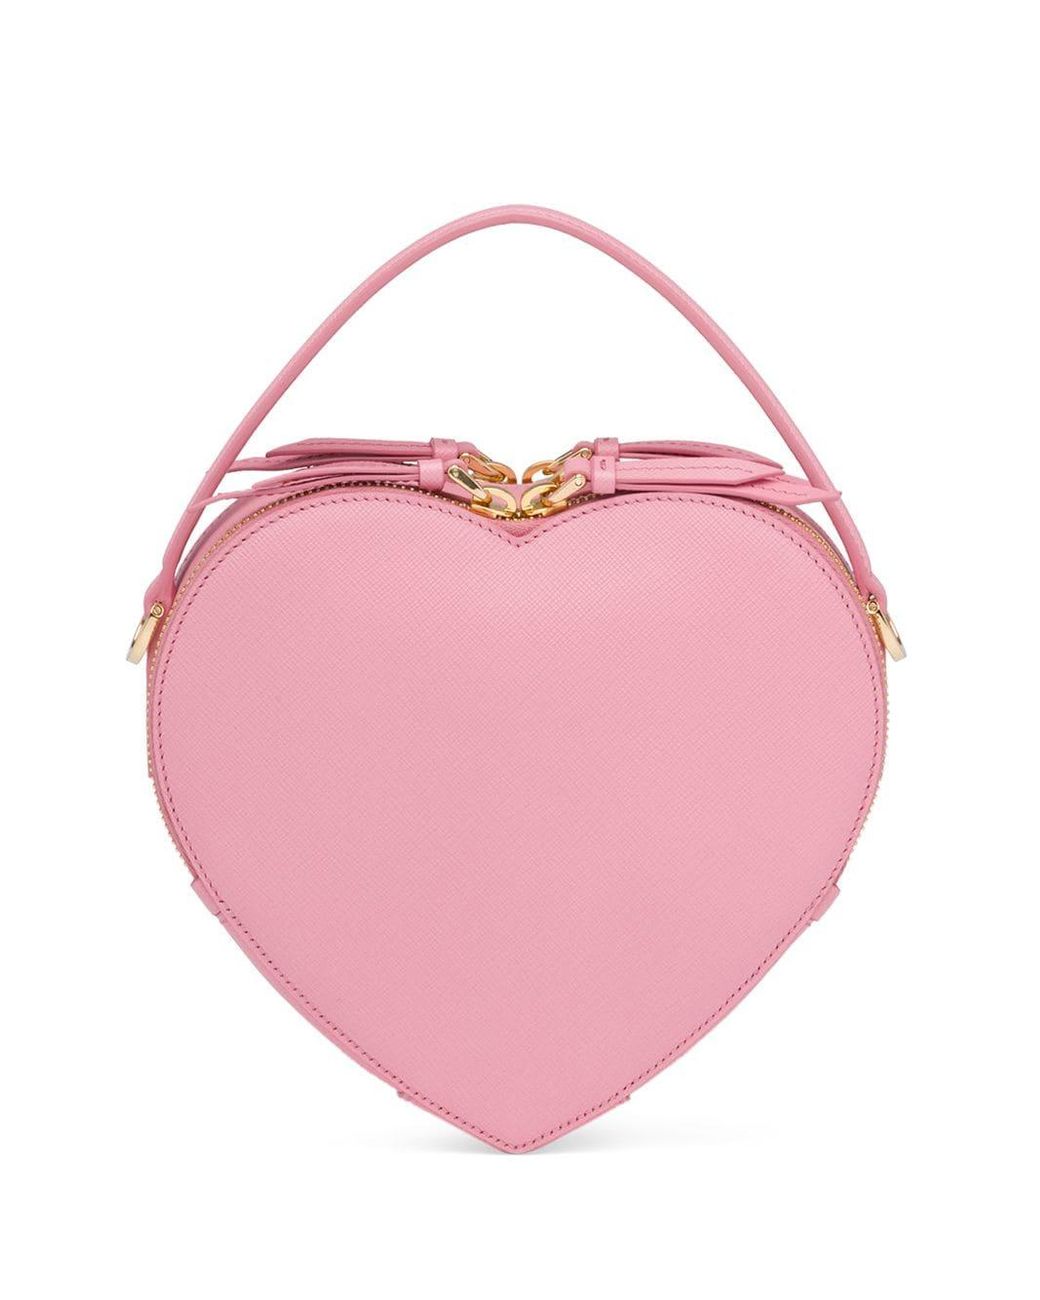 Prada Leather Odette Bag in Pink | Lyst